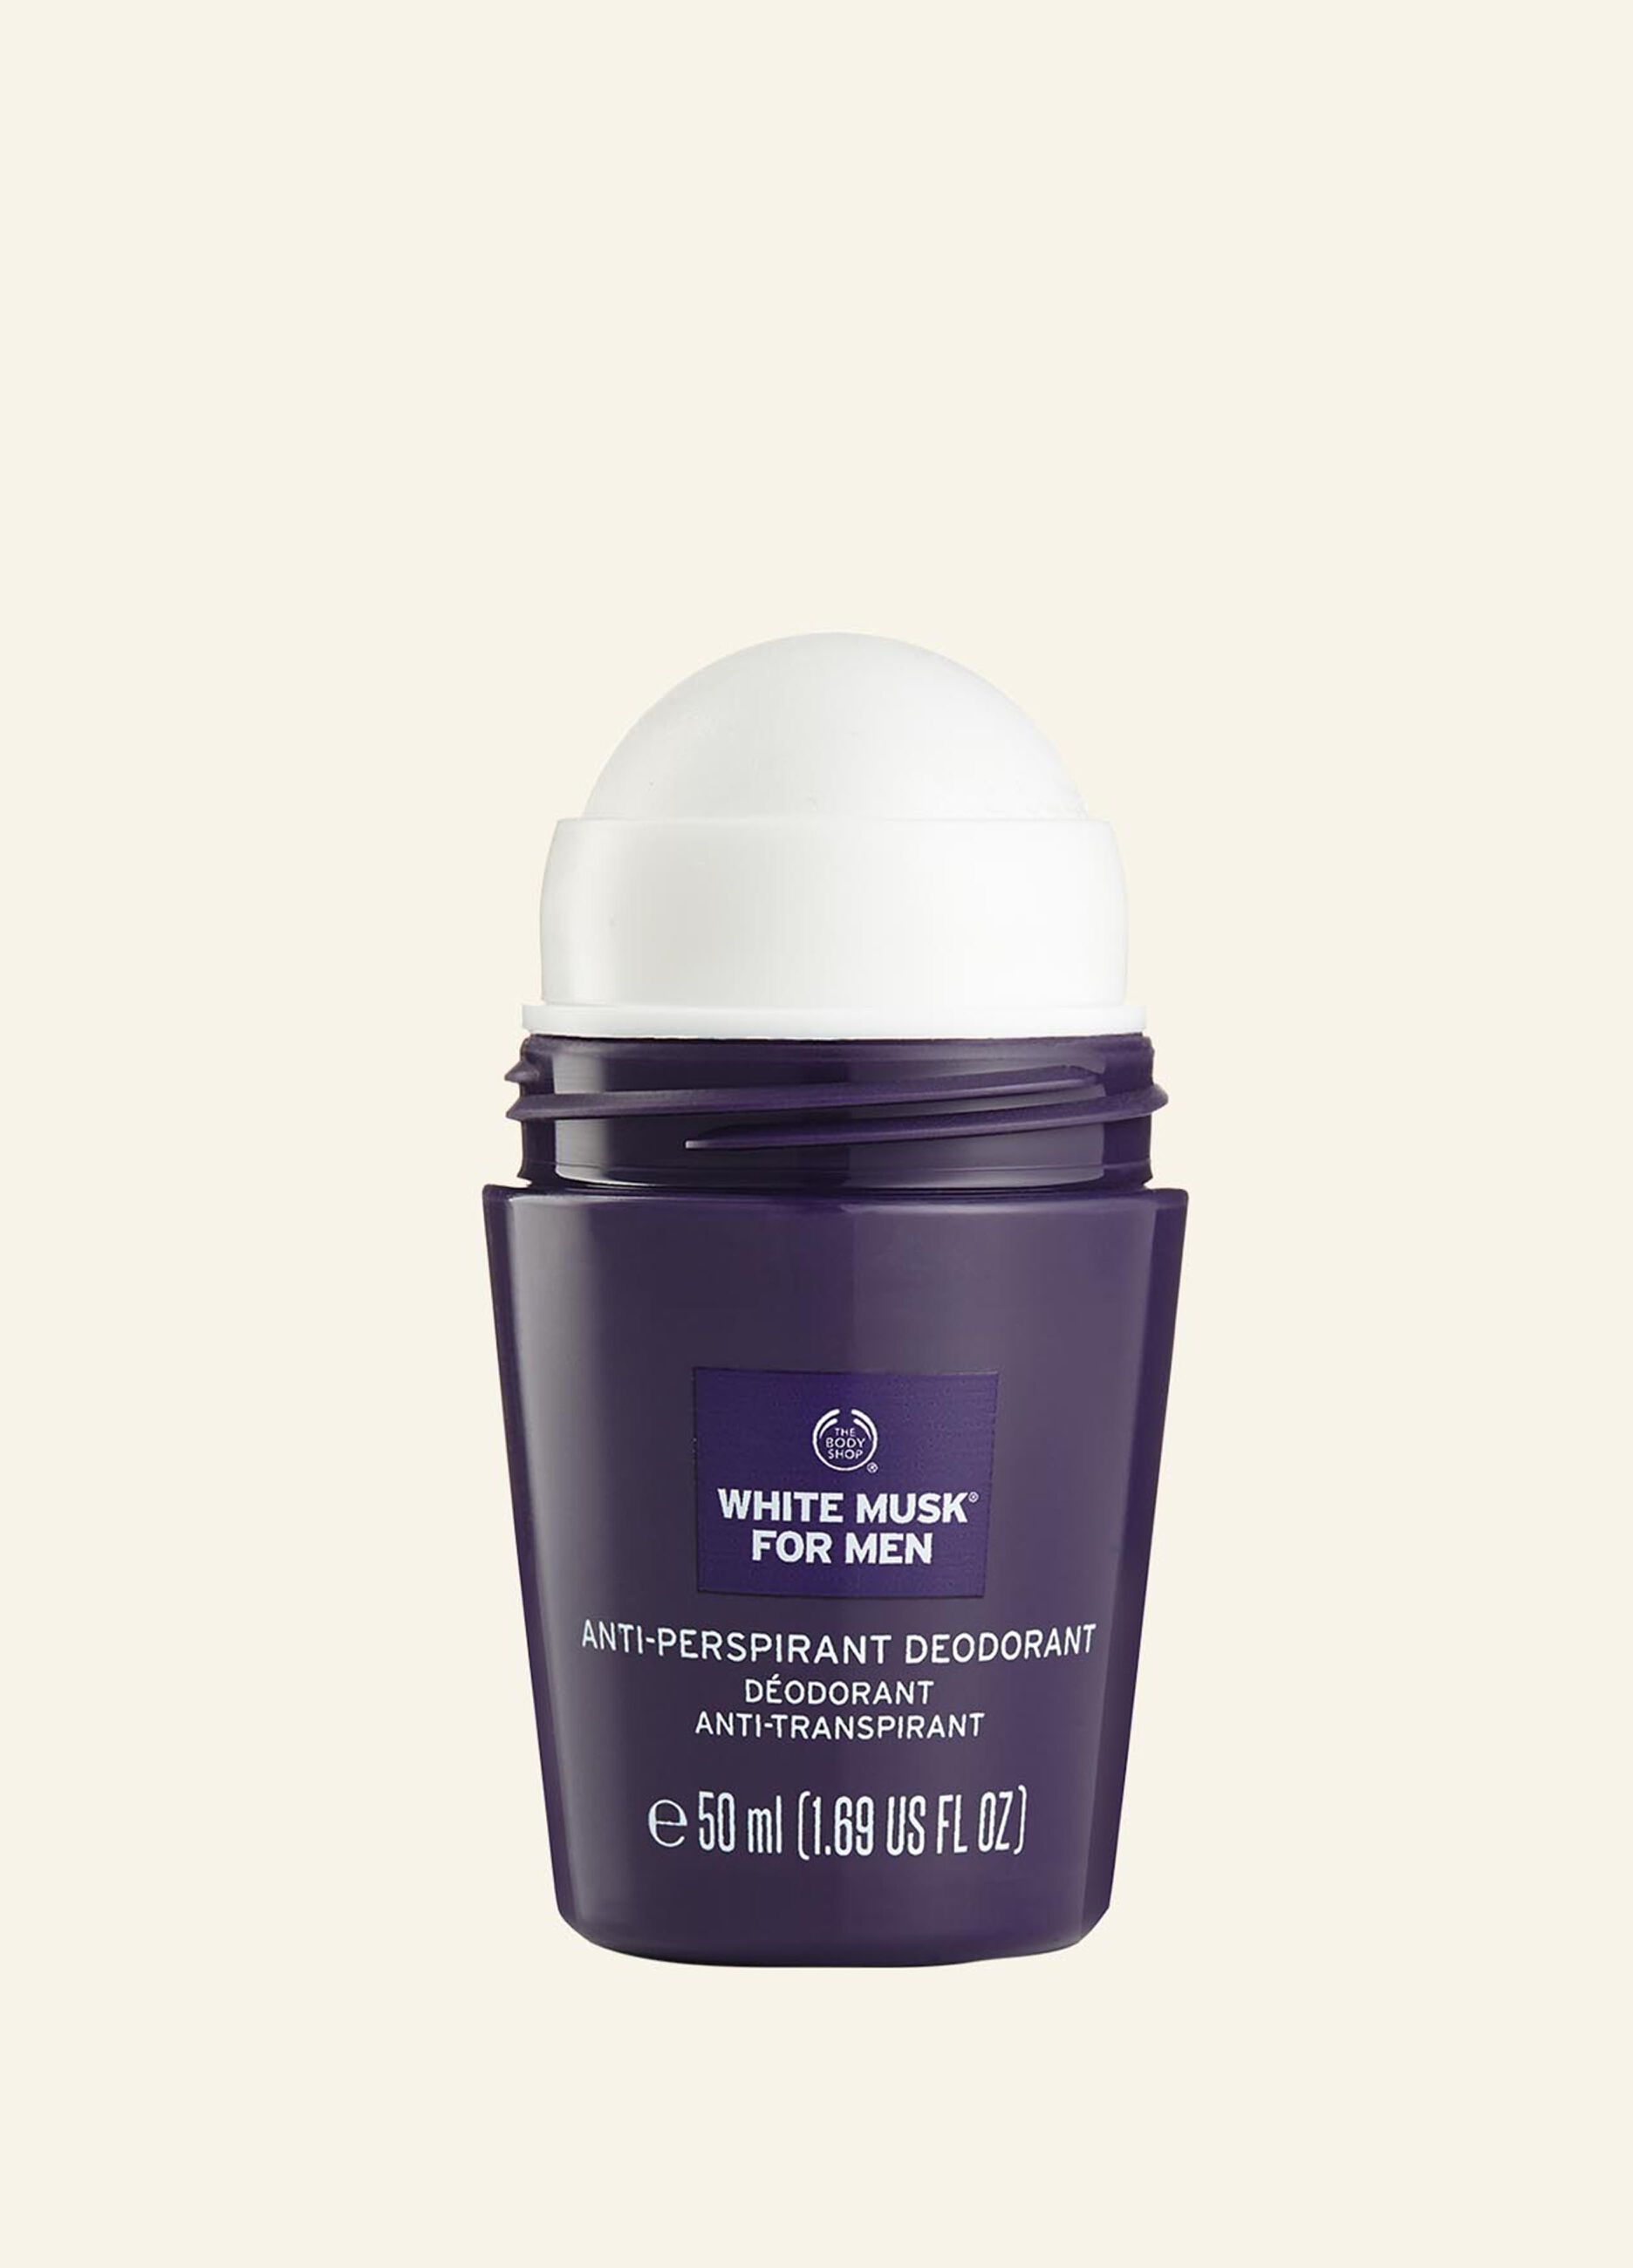 The Body Shop White Musk® anti-perspirant deodorant